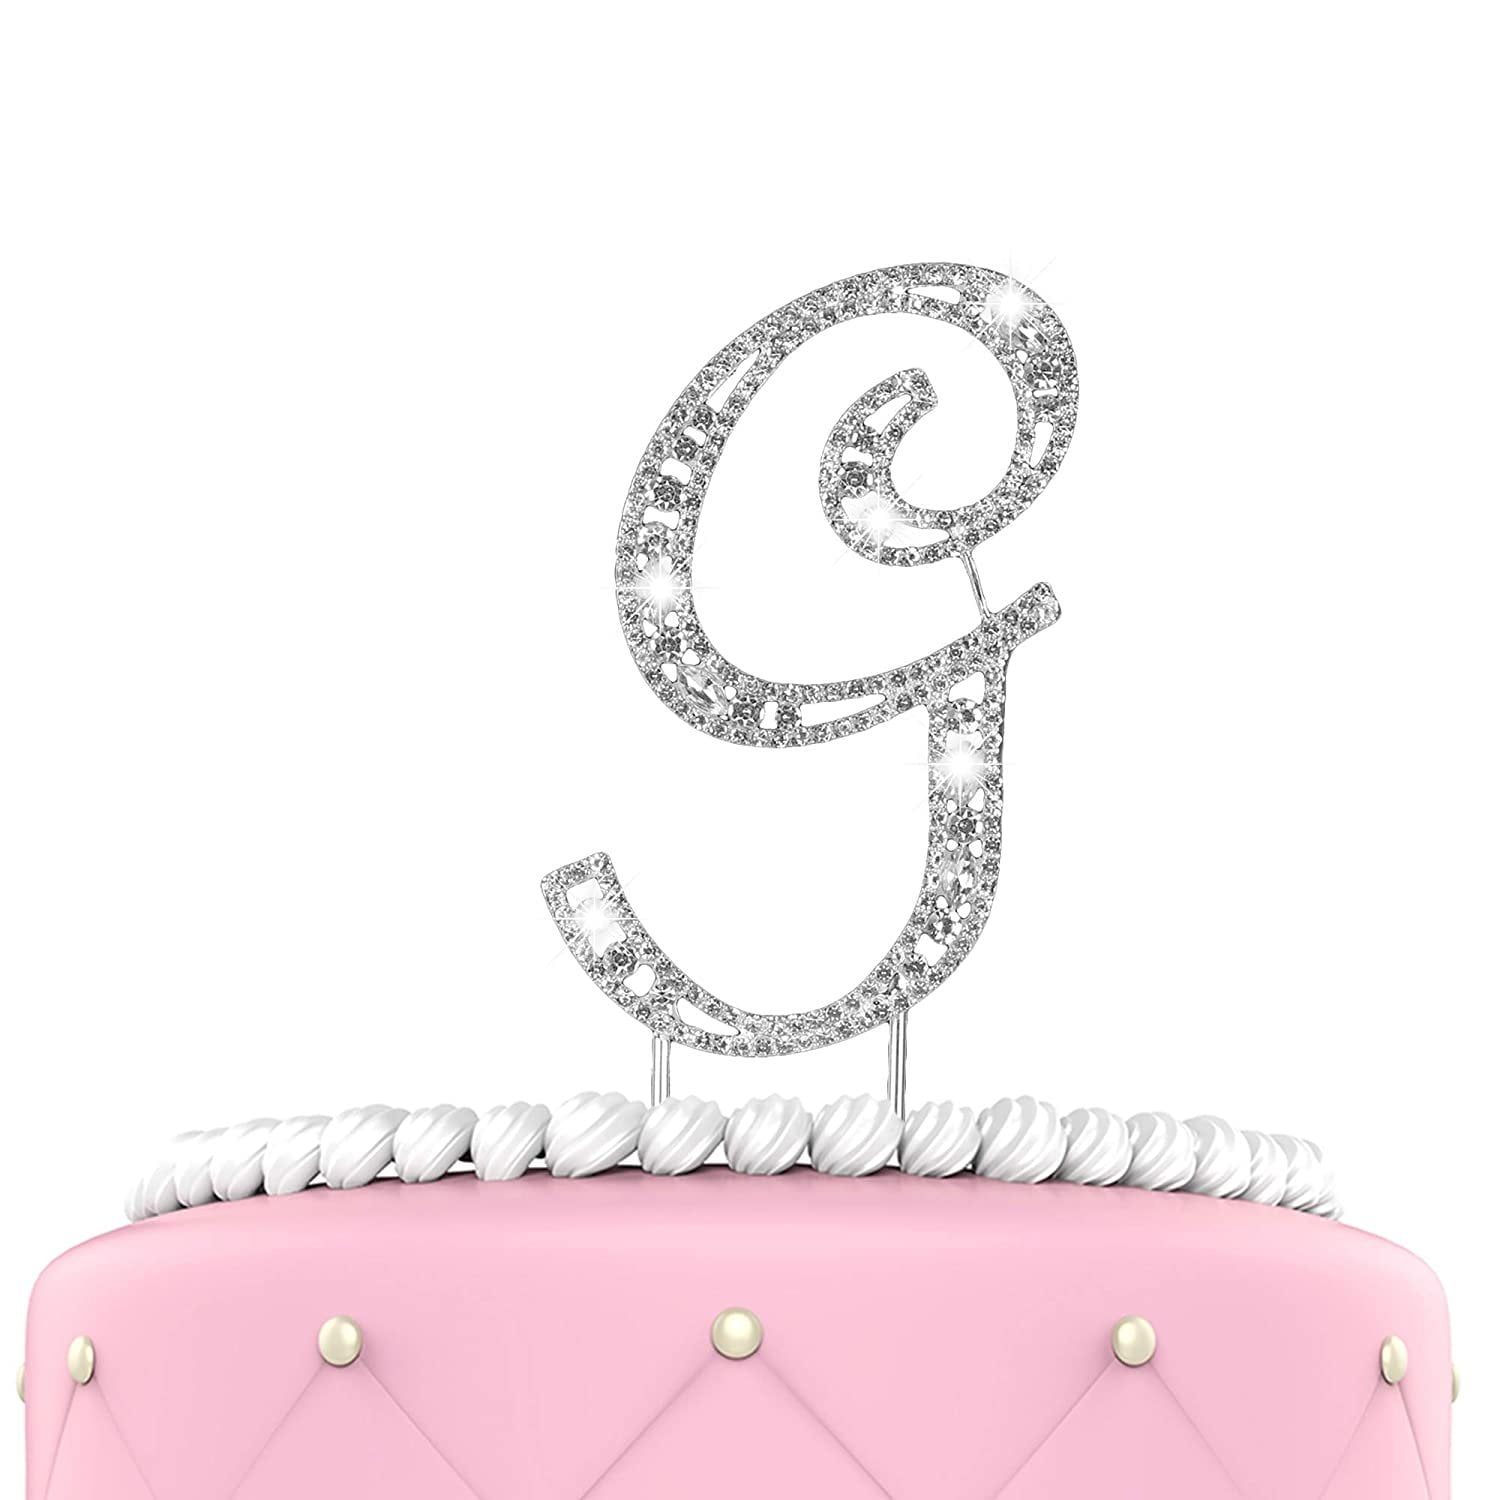 Large Rhinestone Crystal Monogram "G" Wedding Cake Topper 5" inch High Silver 